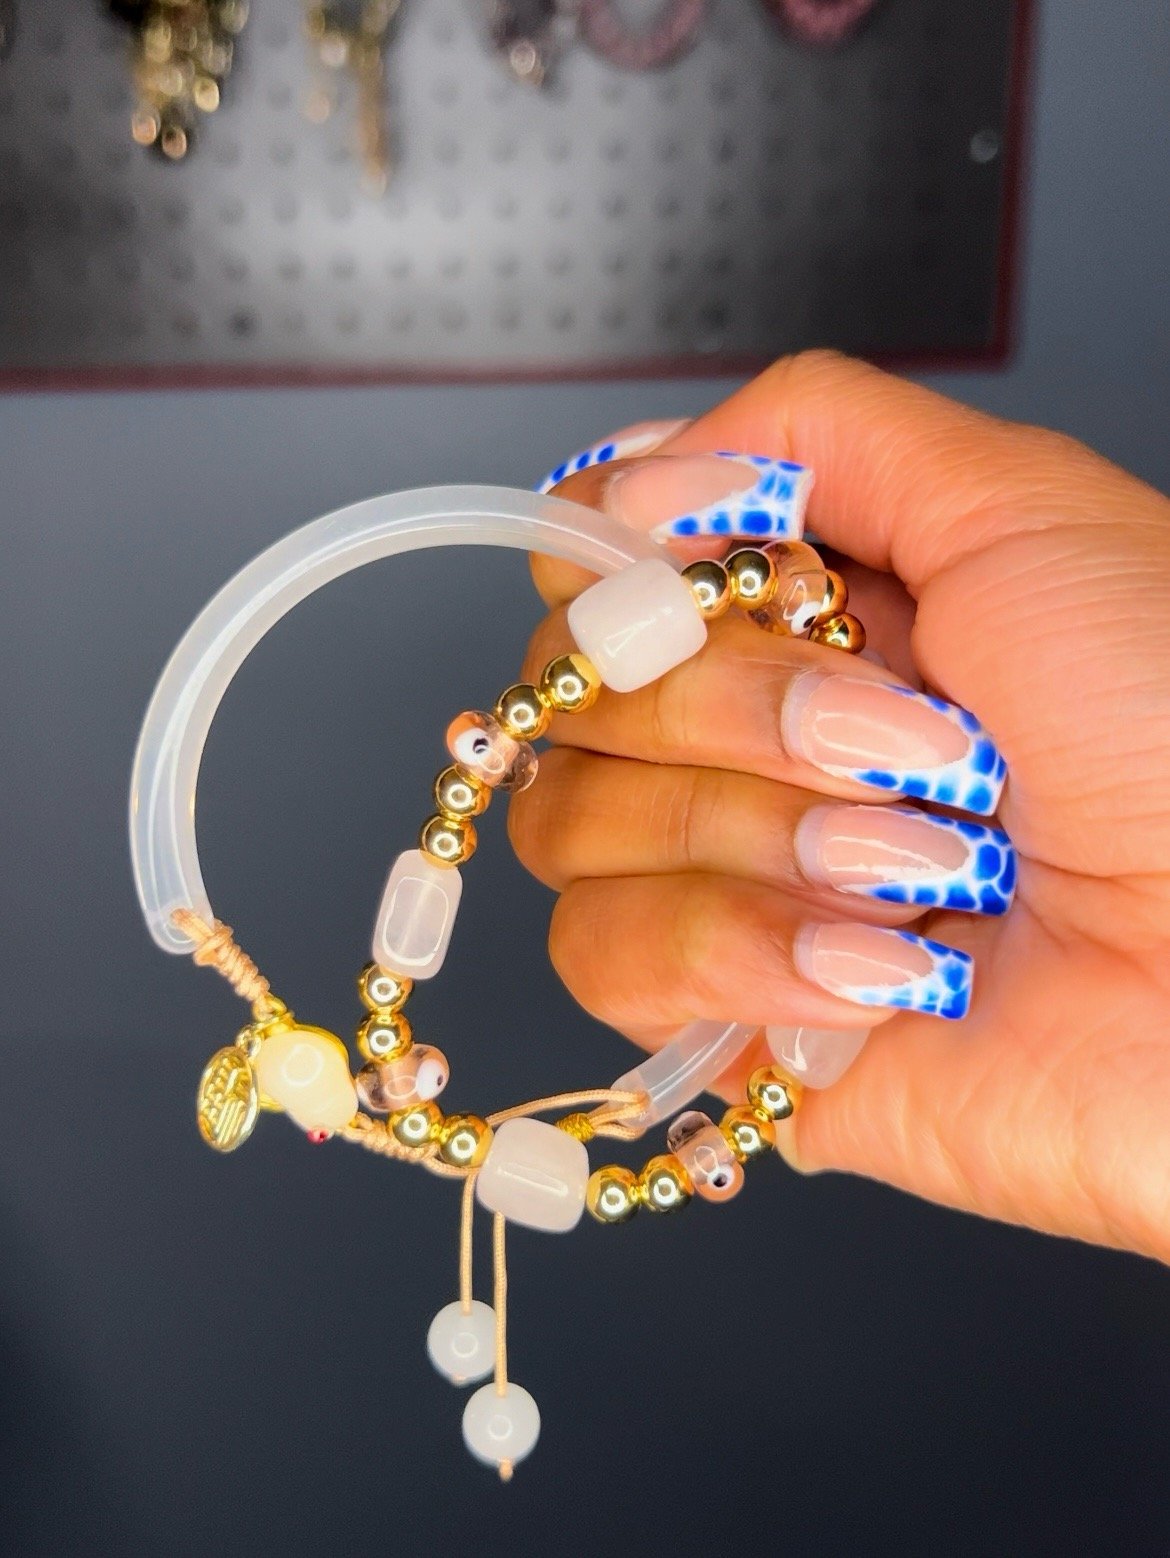 Adjustable Women Bangle Bracelet Chain with Diamond Charms Jewelry Esg13387  - China Bangle Bracelet and Adjustable Bangle Bracelet price |  Made-in-China.com